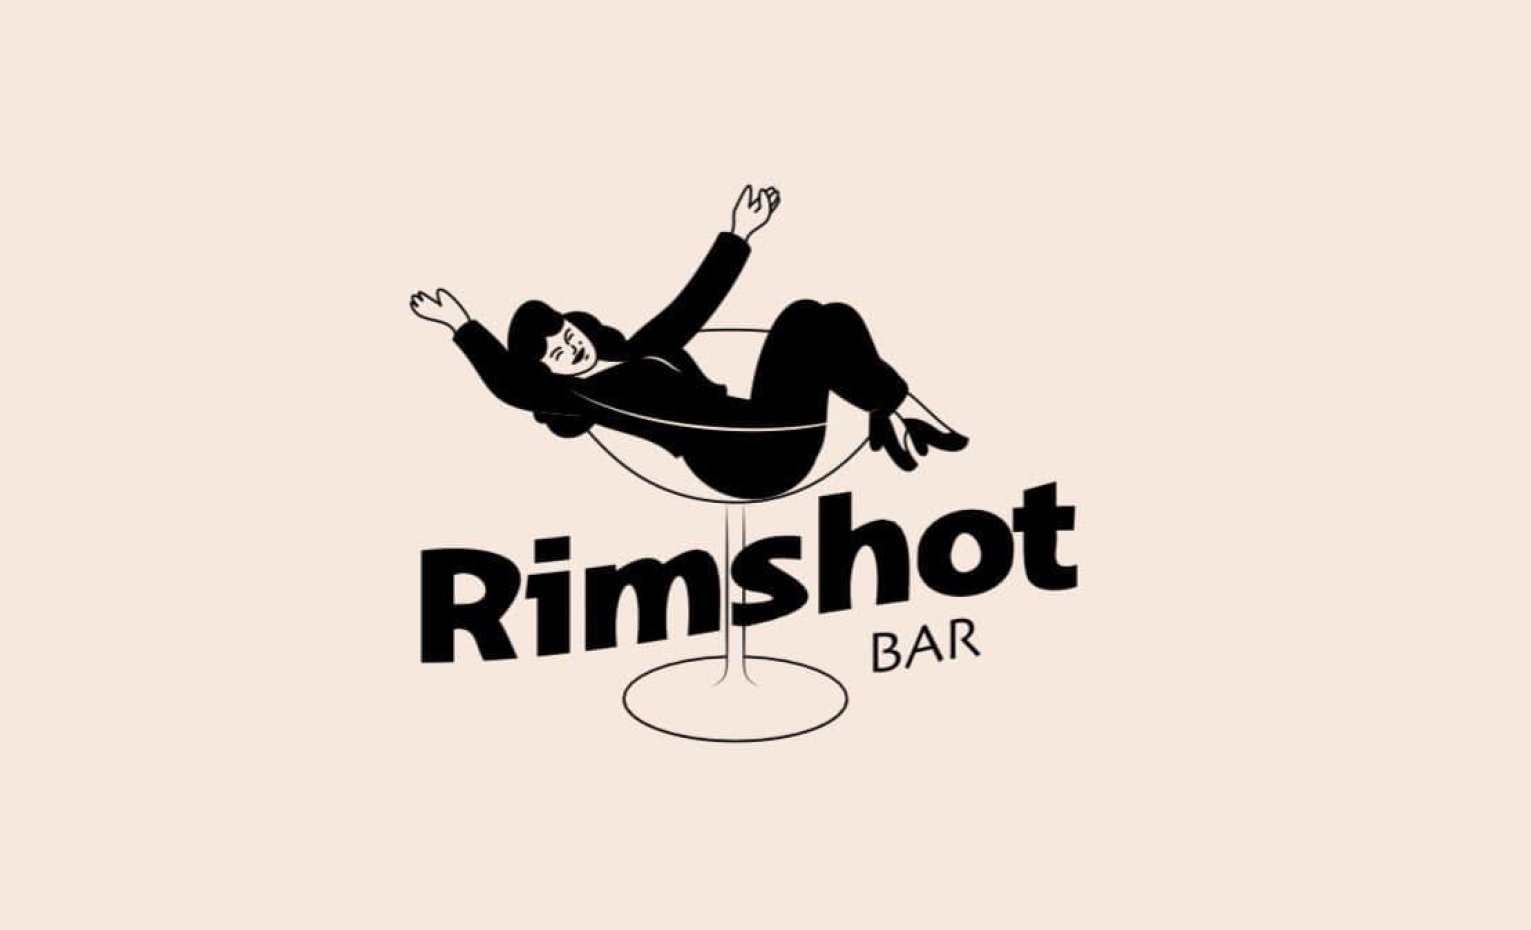 Rimshot Bar’ : กรุงเทพมหานคร